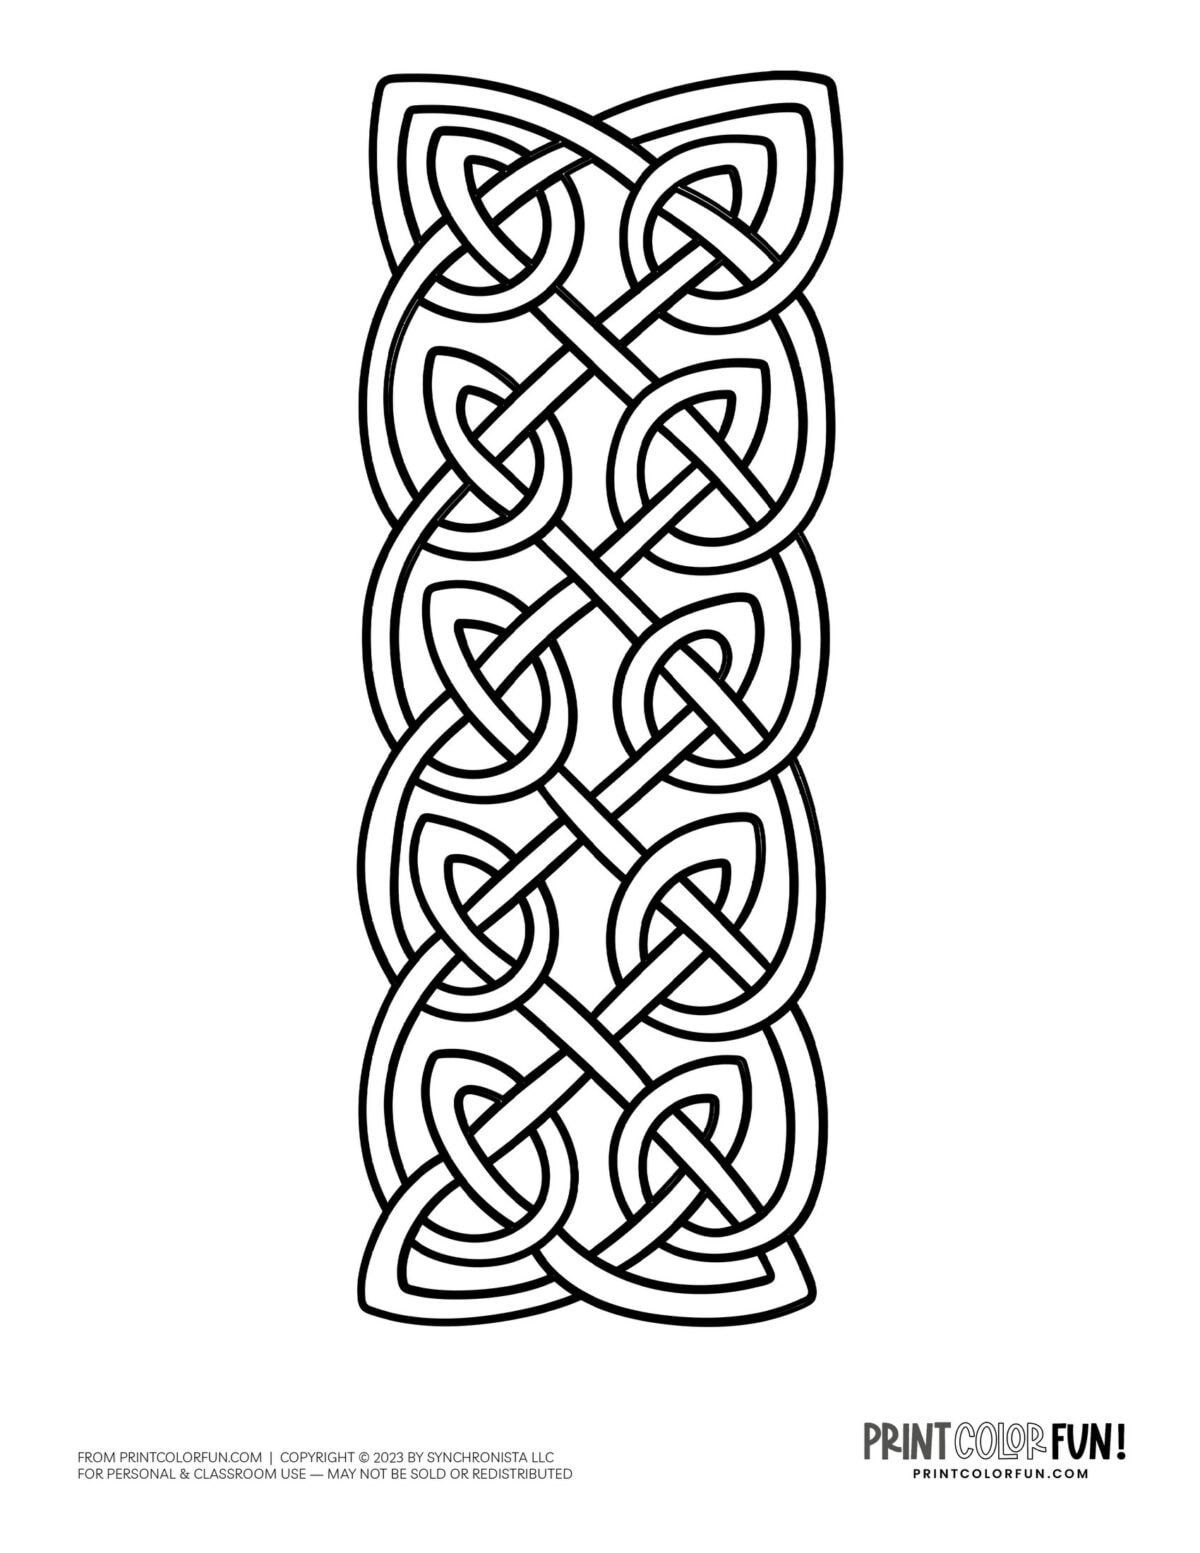 Celtic knot shapes: Coloring pages & clipart designs, at PrintColorFun.com